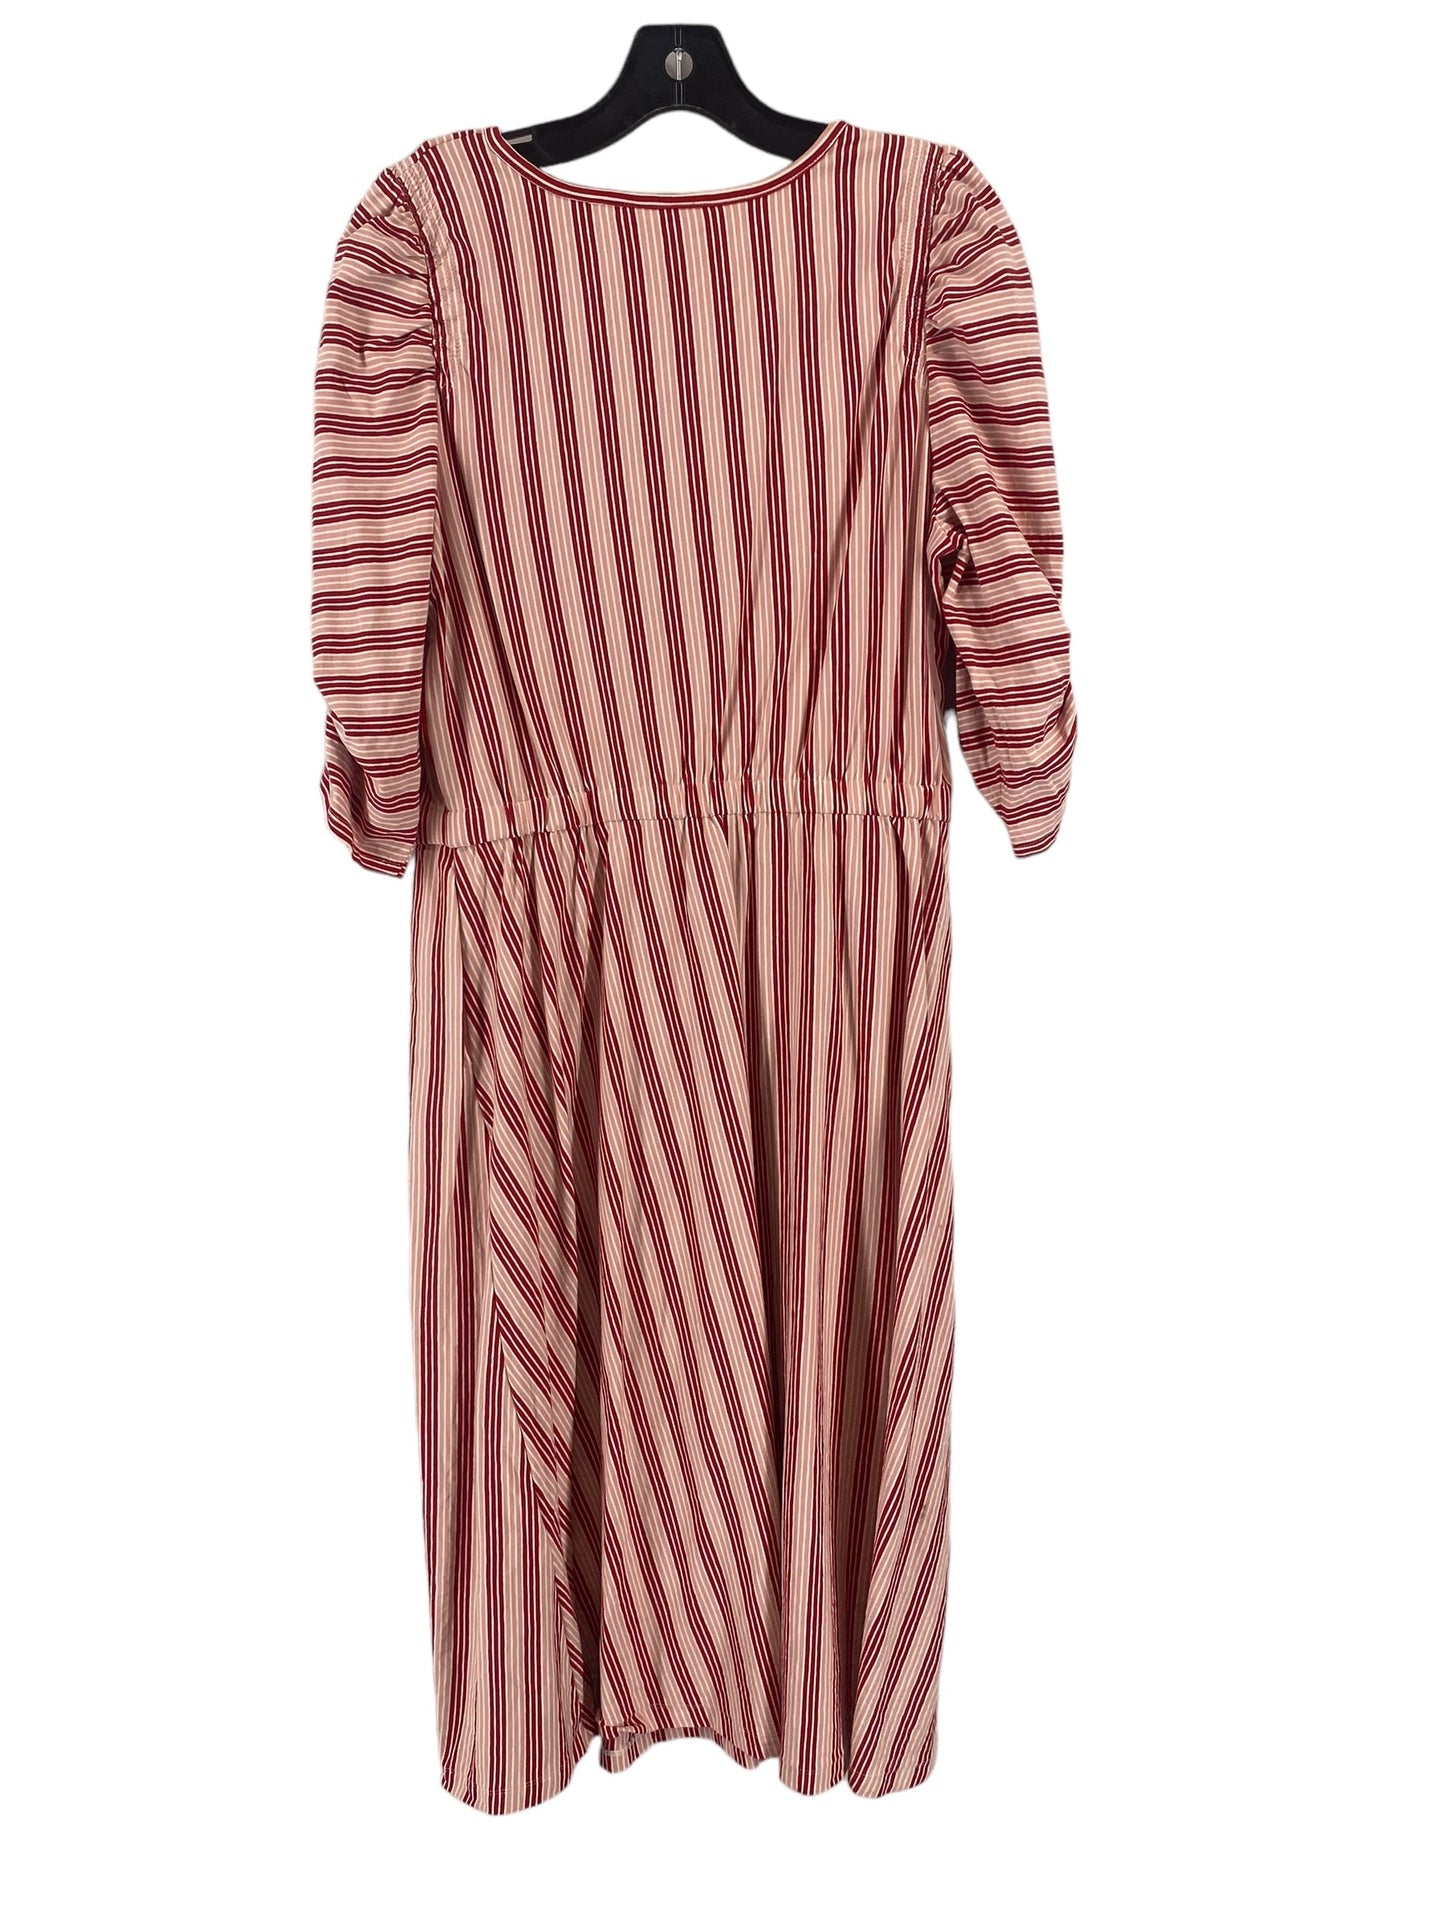 Dress Casual Midi By Matilda Jane  Size: M